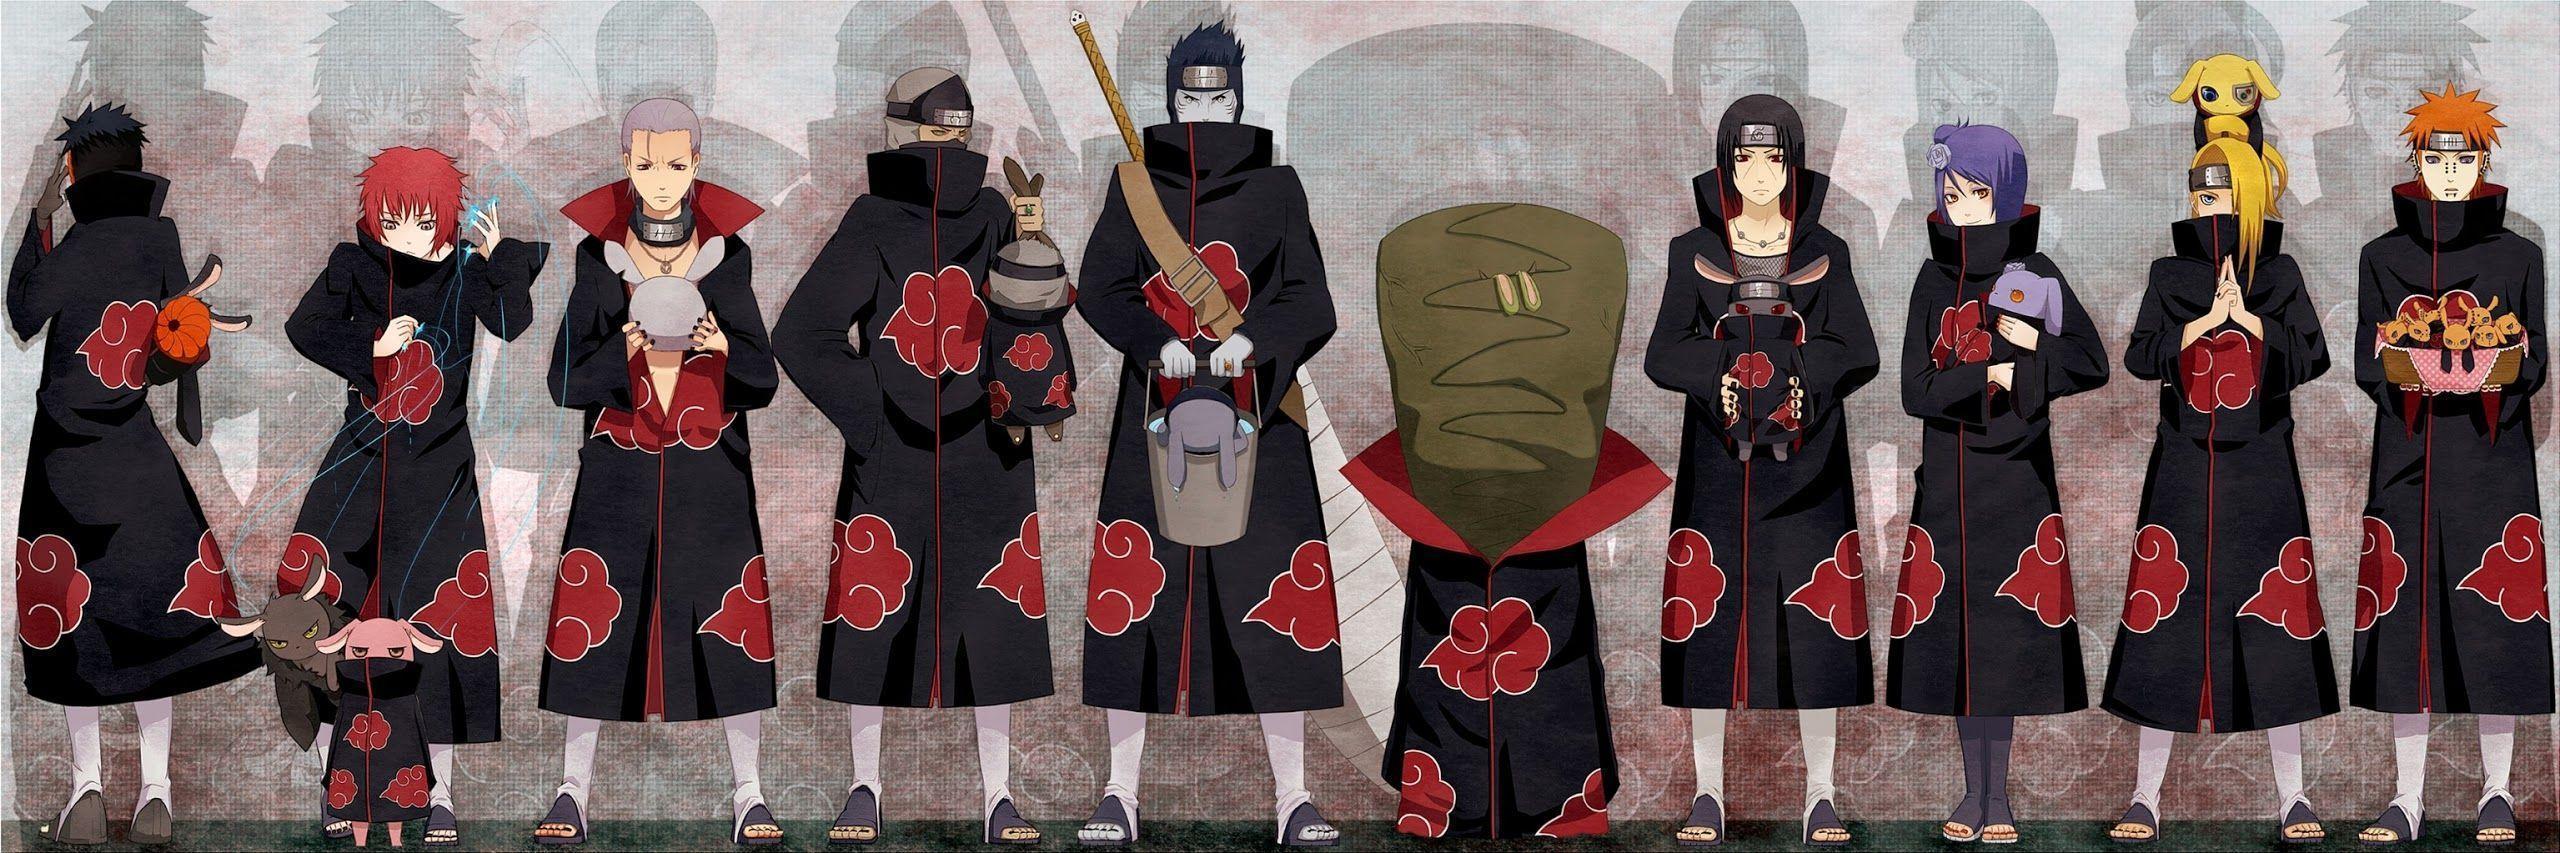 Naruto Group Wallpapers